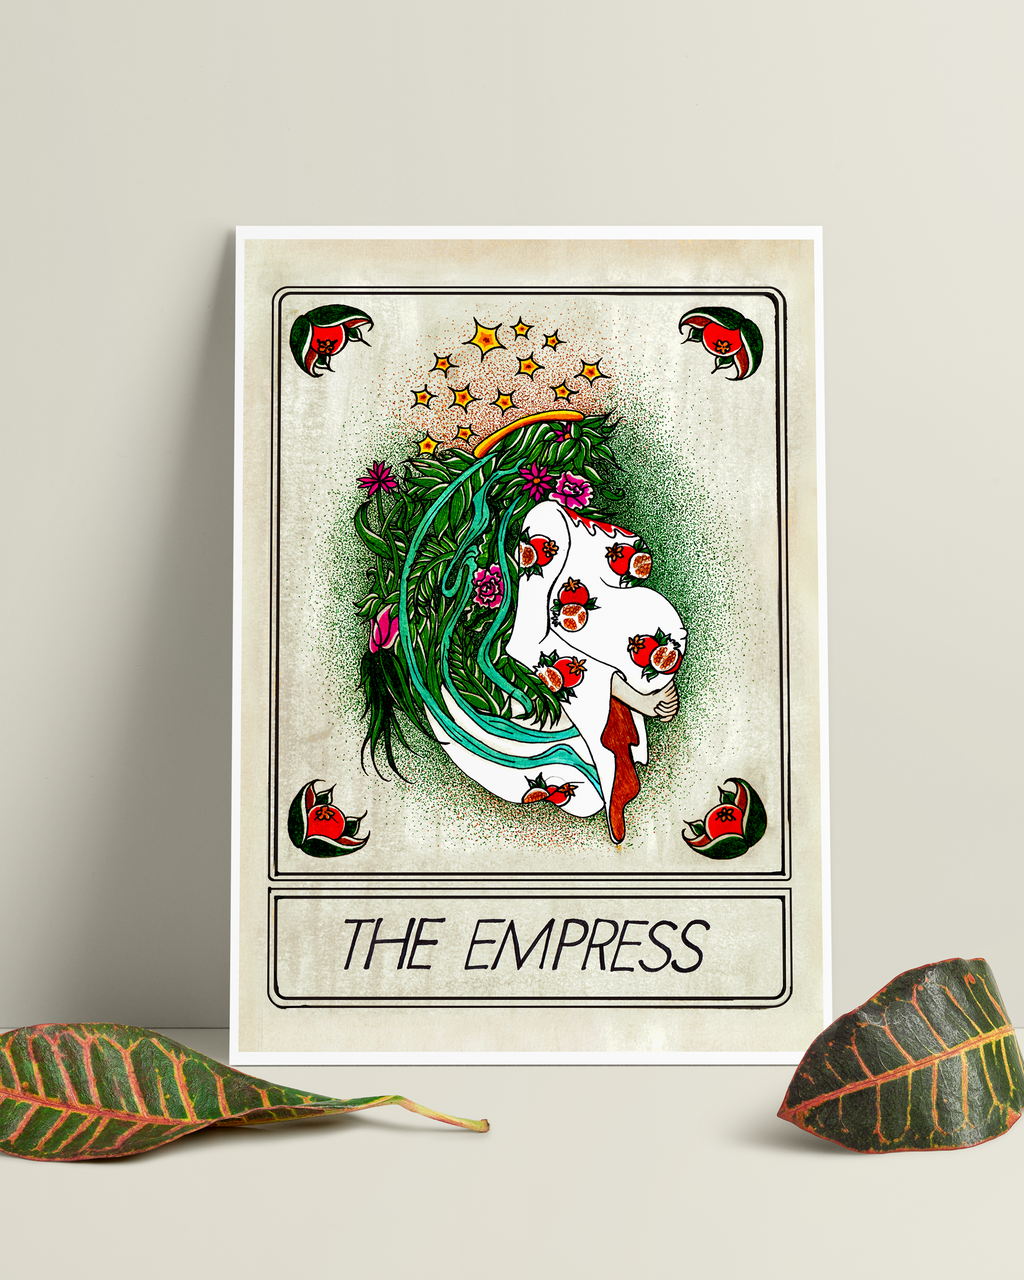 The Empress - Poster Print